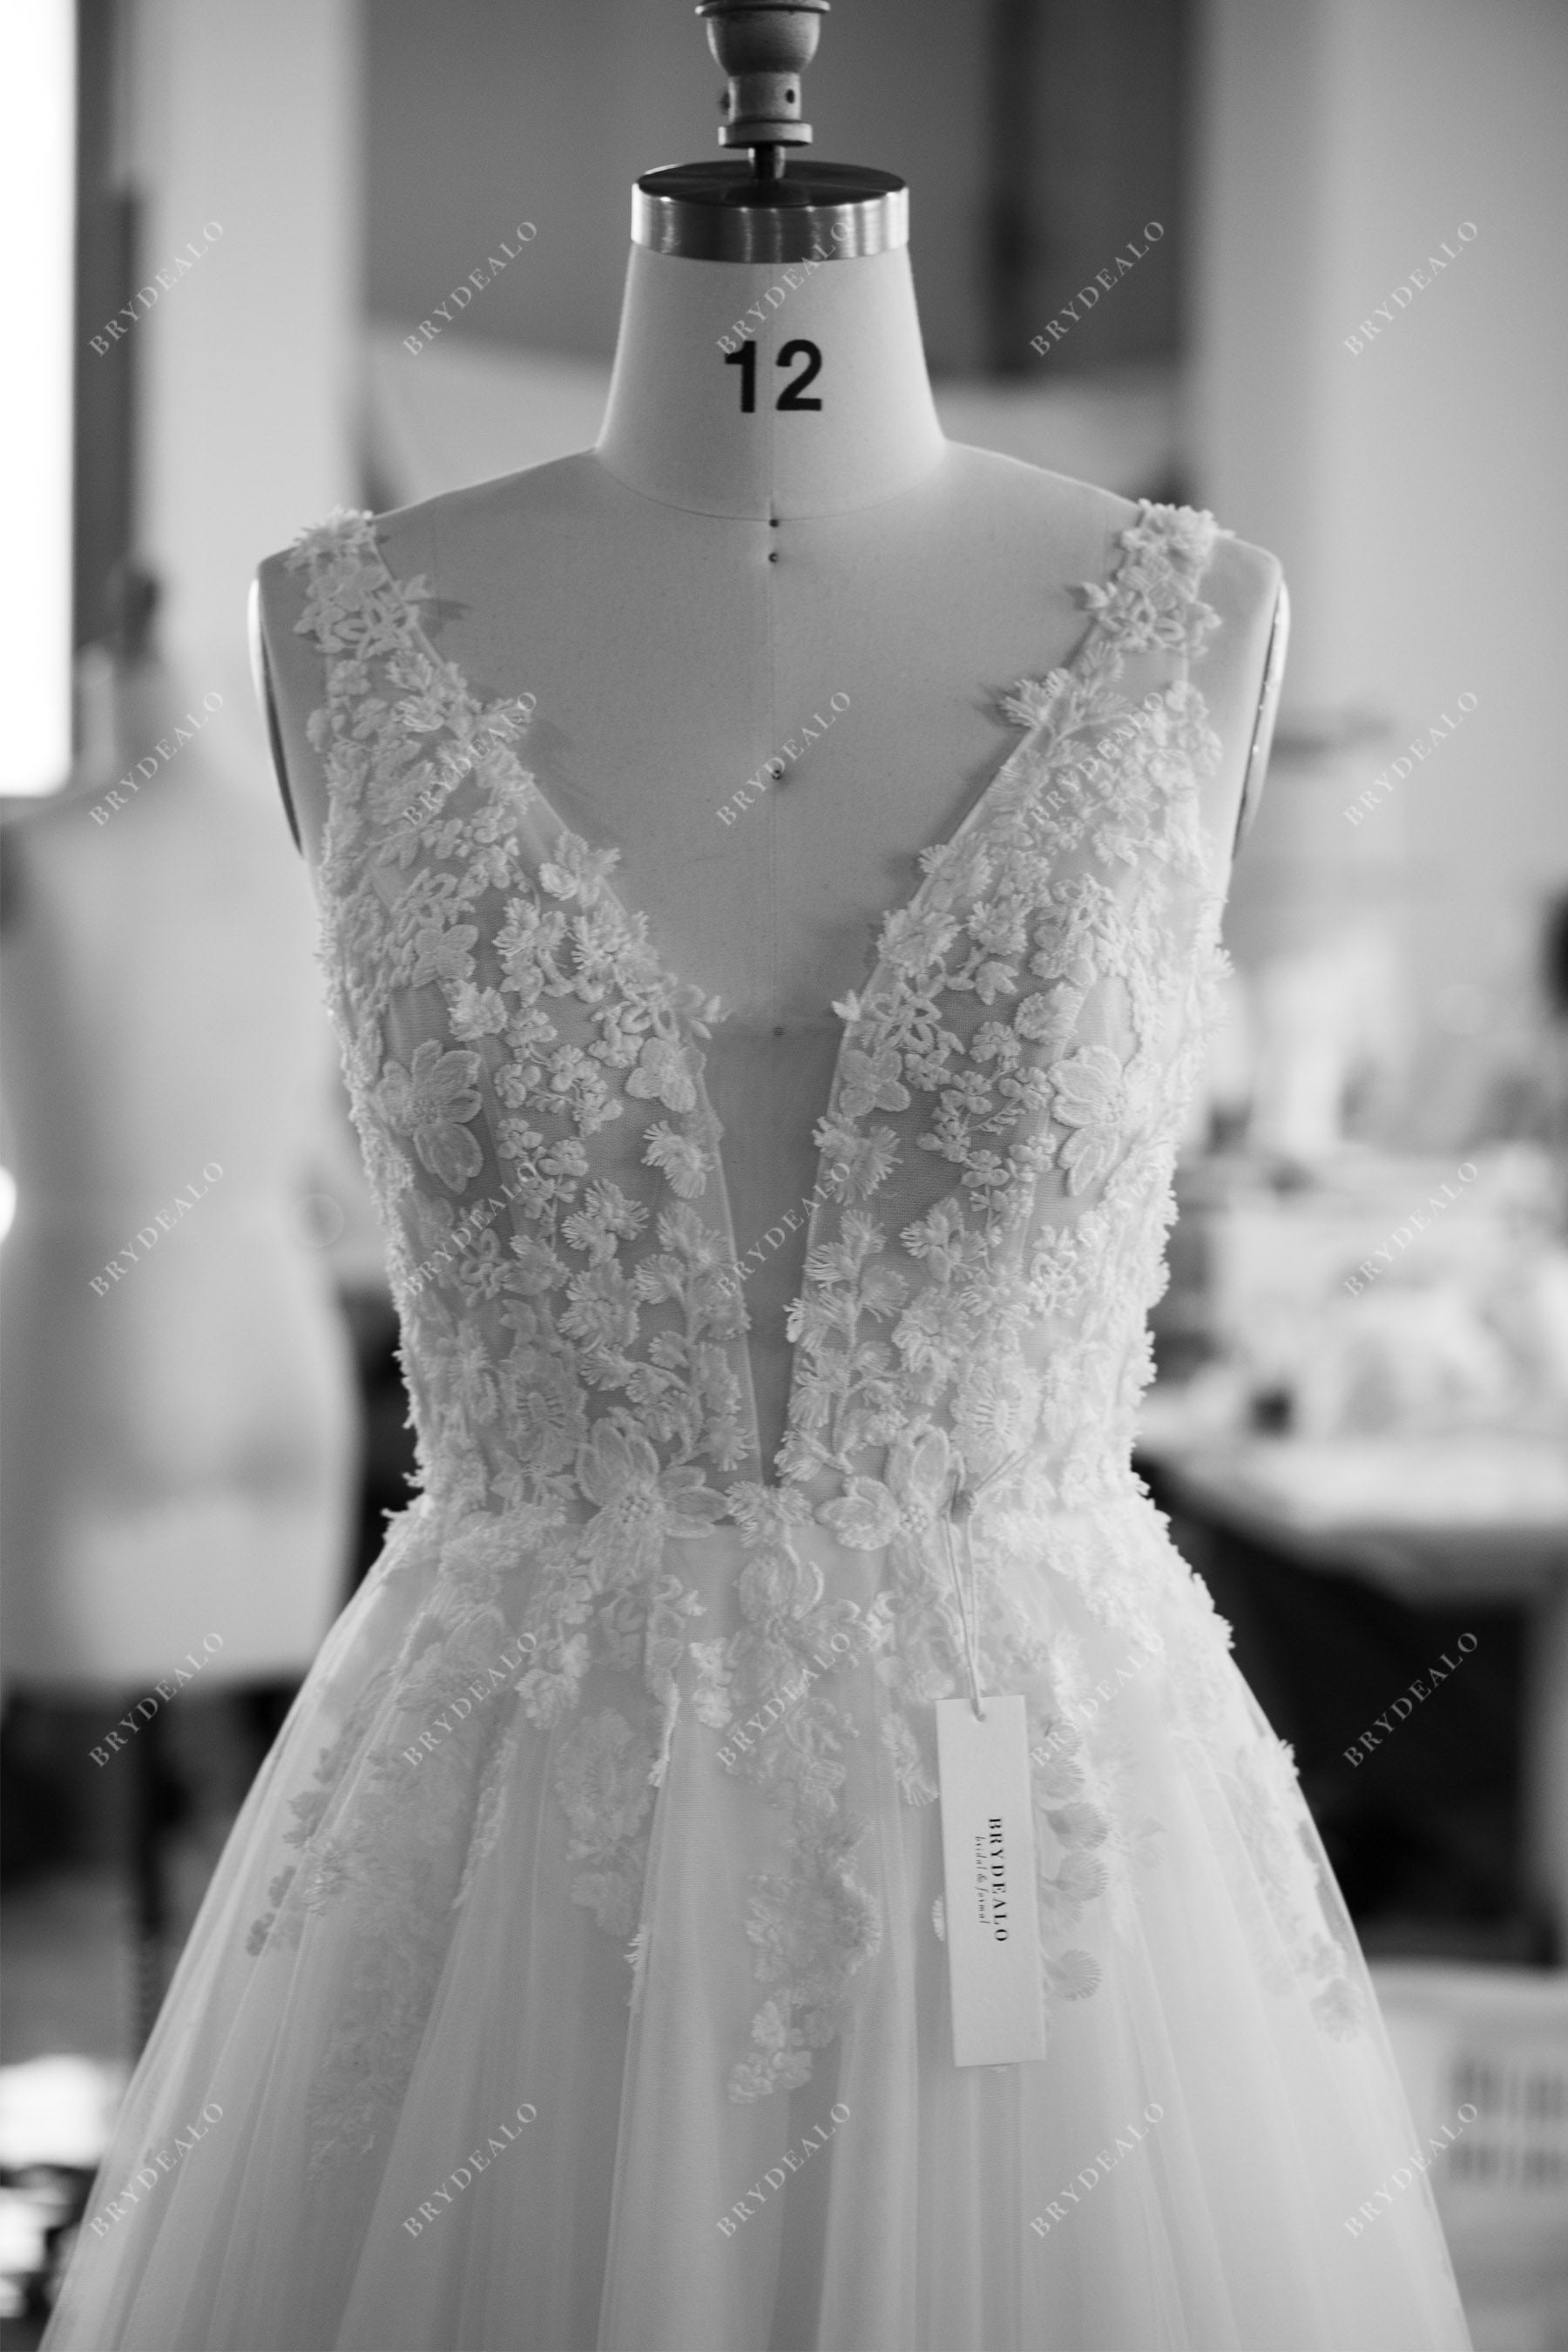 wholesale plunging lace wedding dress